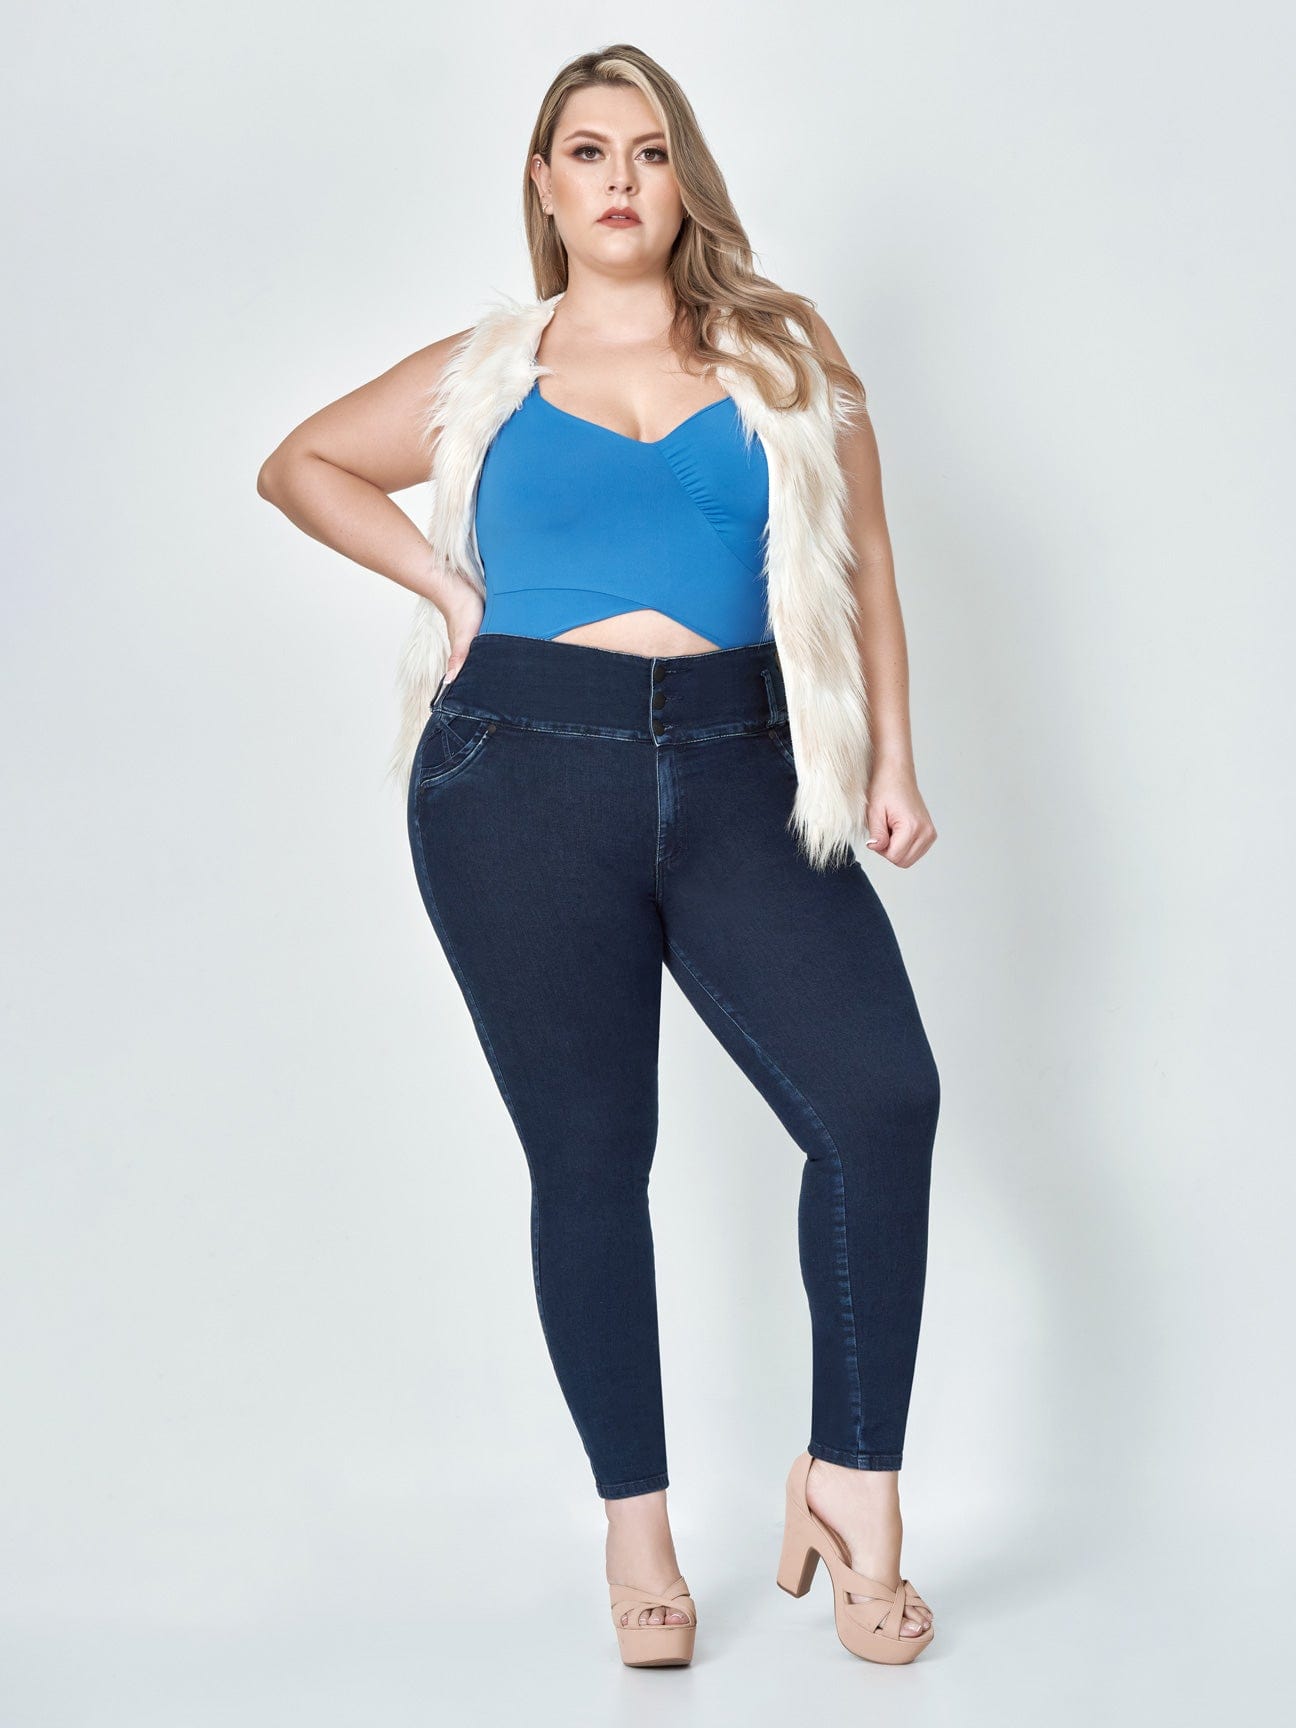 Carmen Tummy Control Jeans full body front view plus sized model.